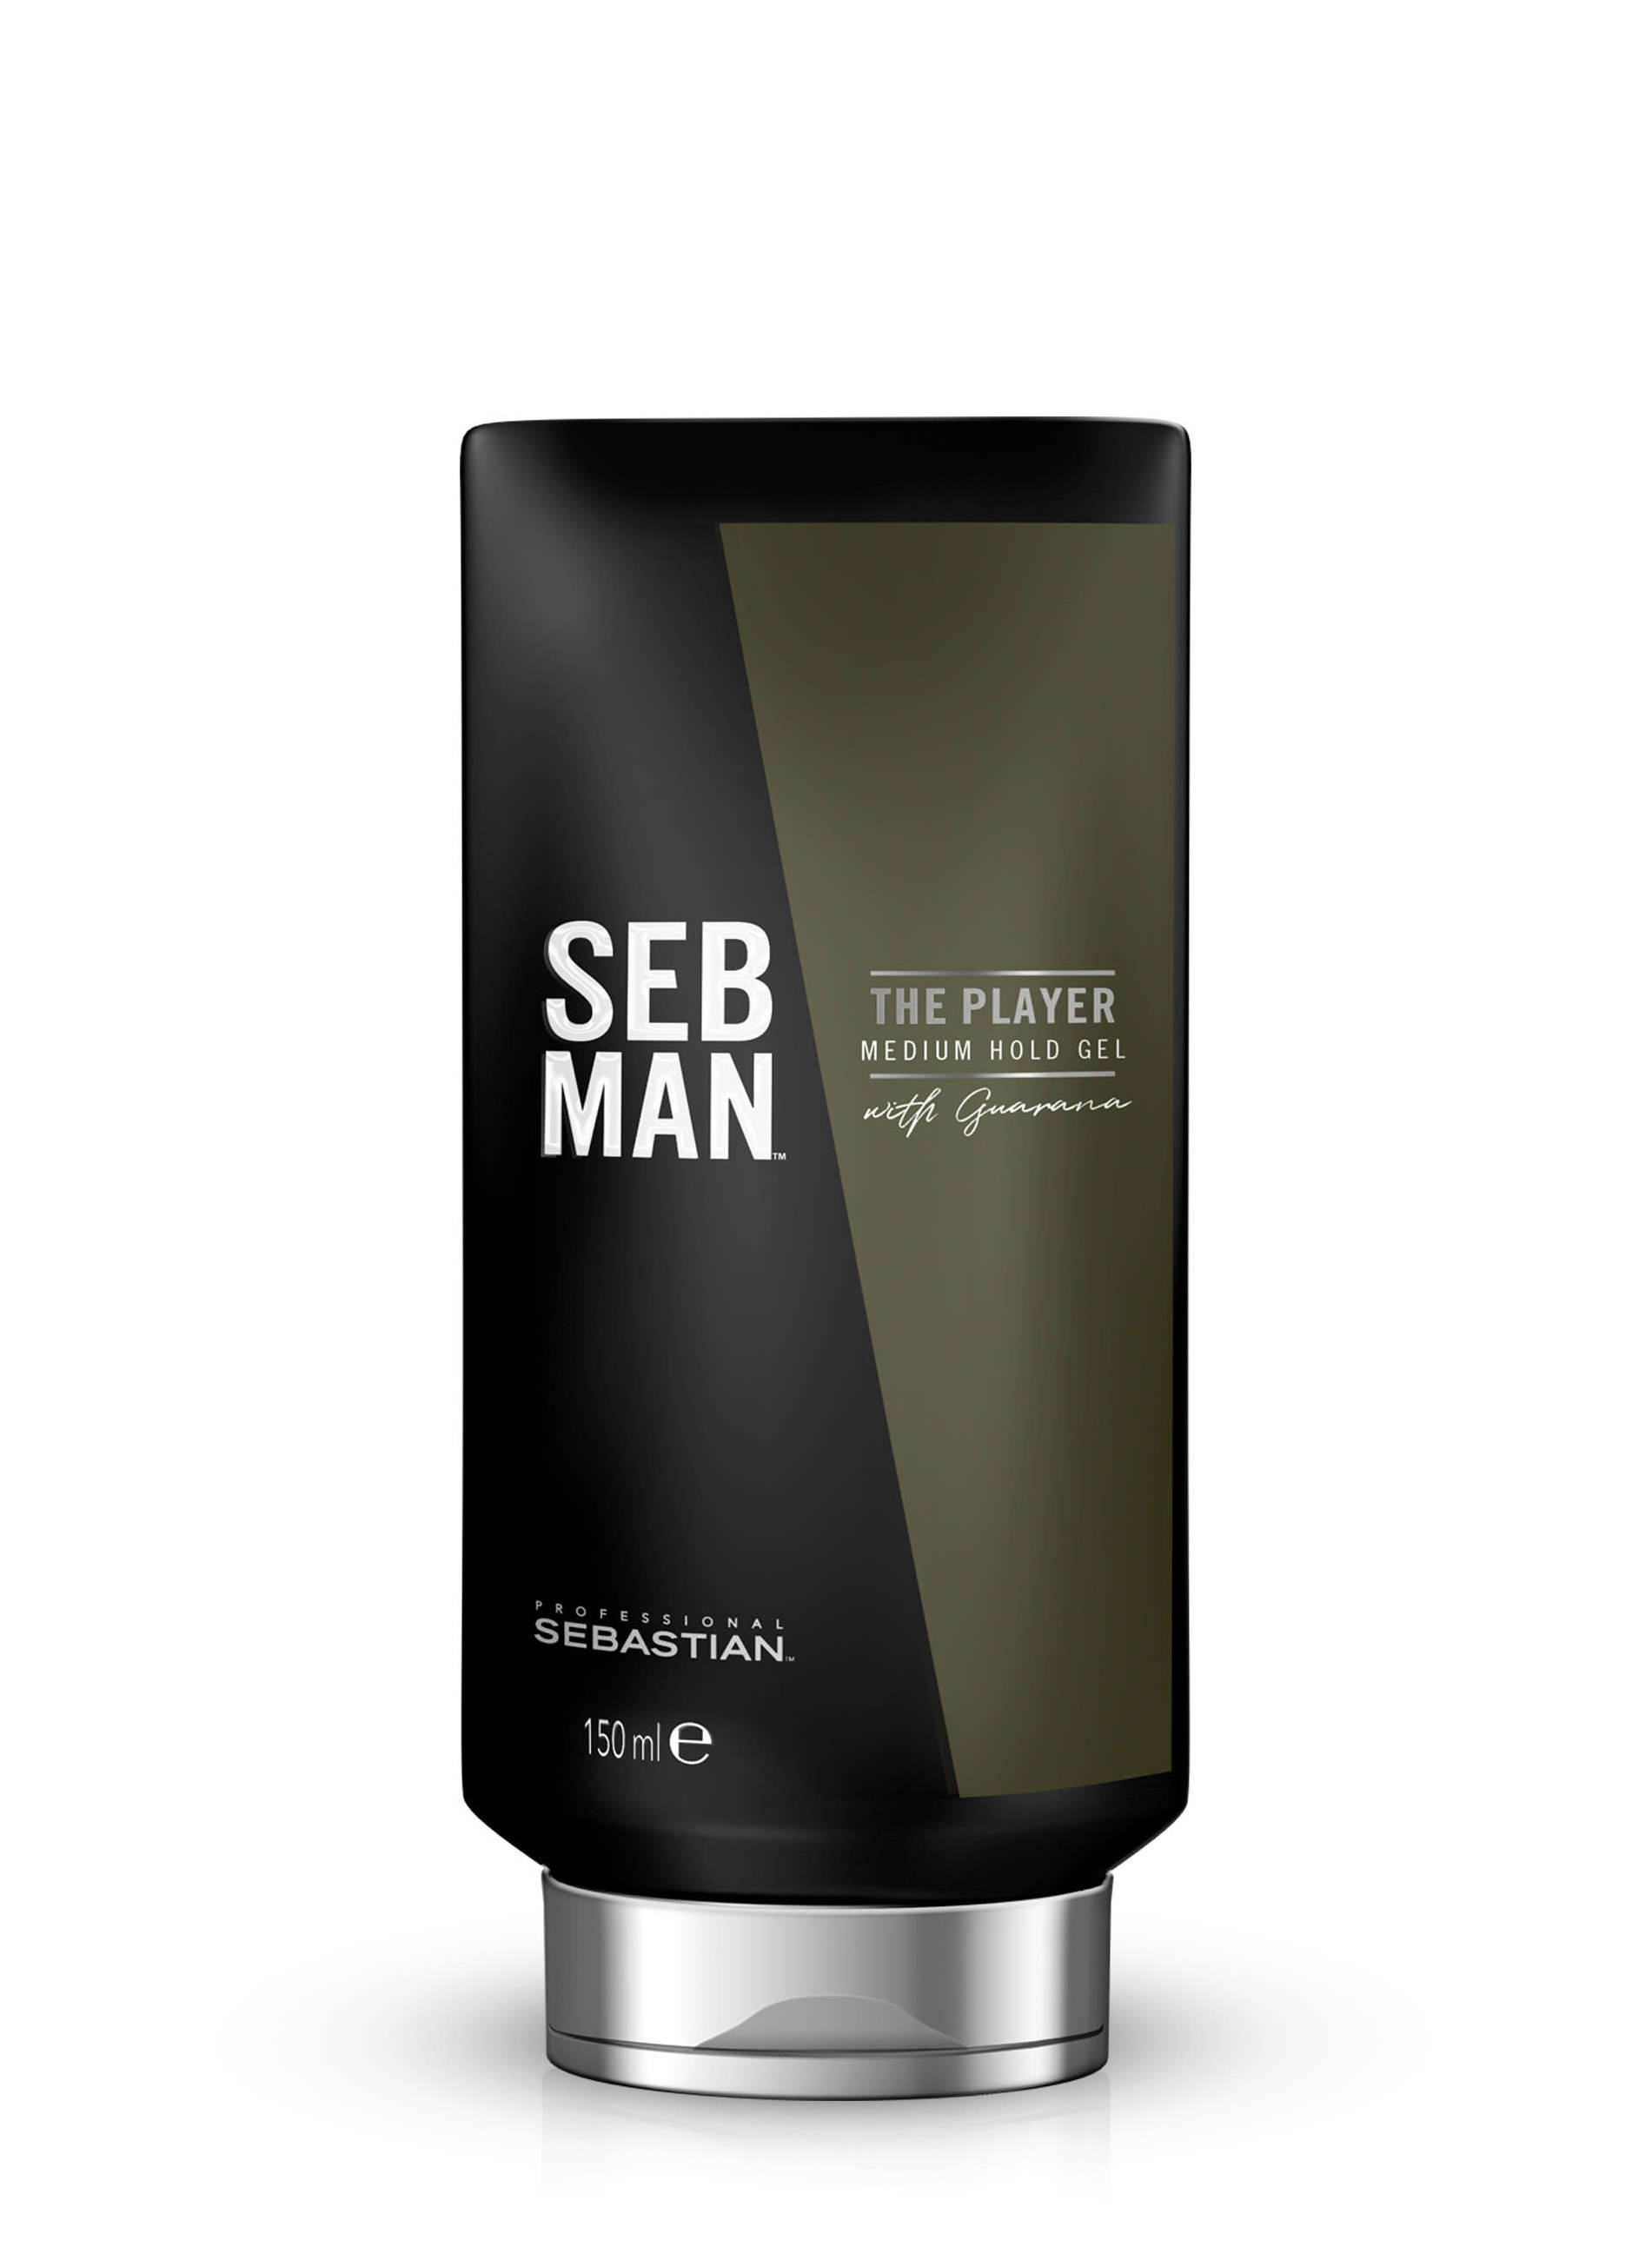 SEB MAN Гель для укладки волос средней фиксации / THE PLAYER